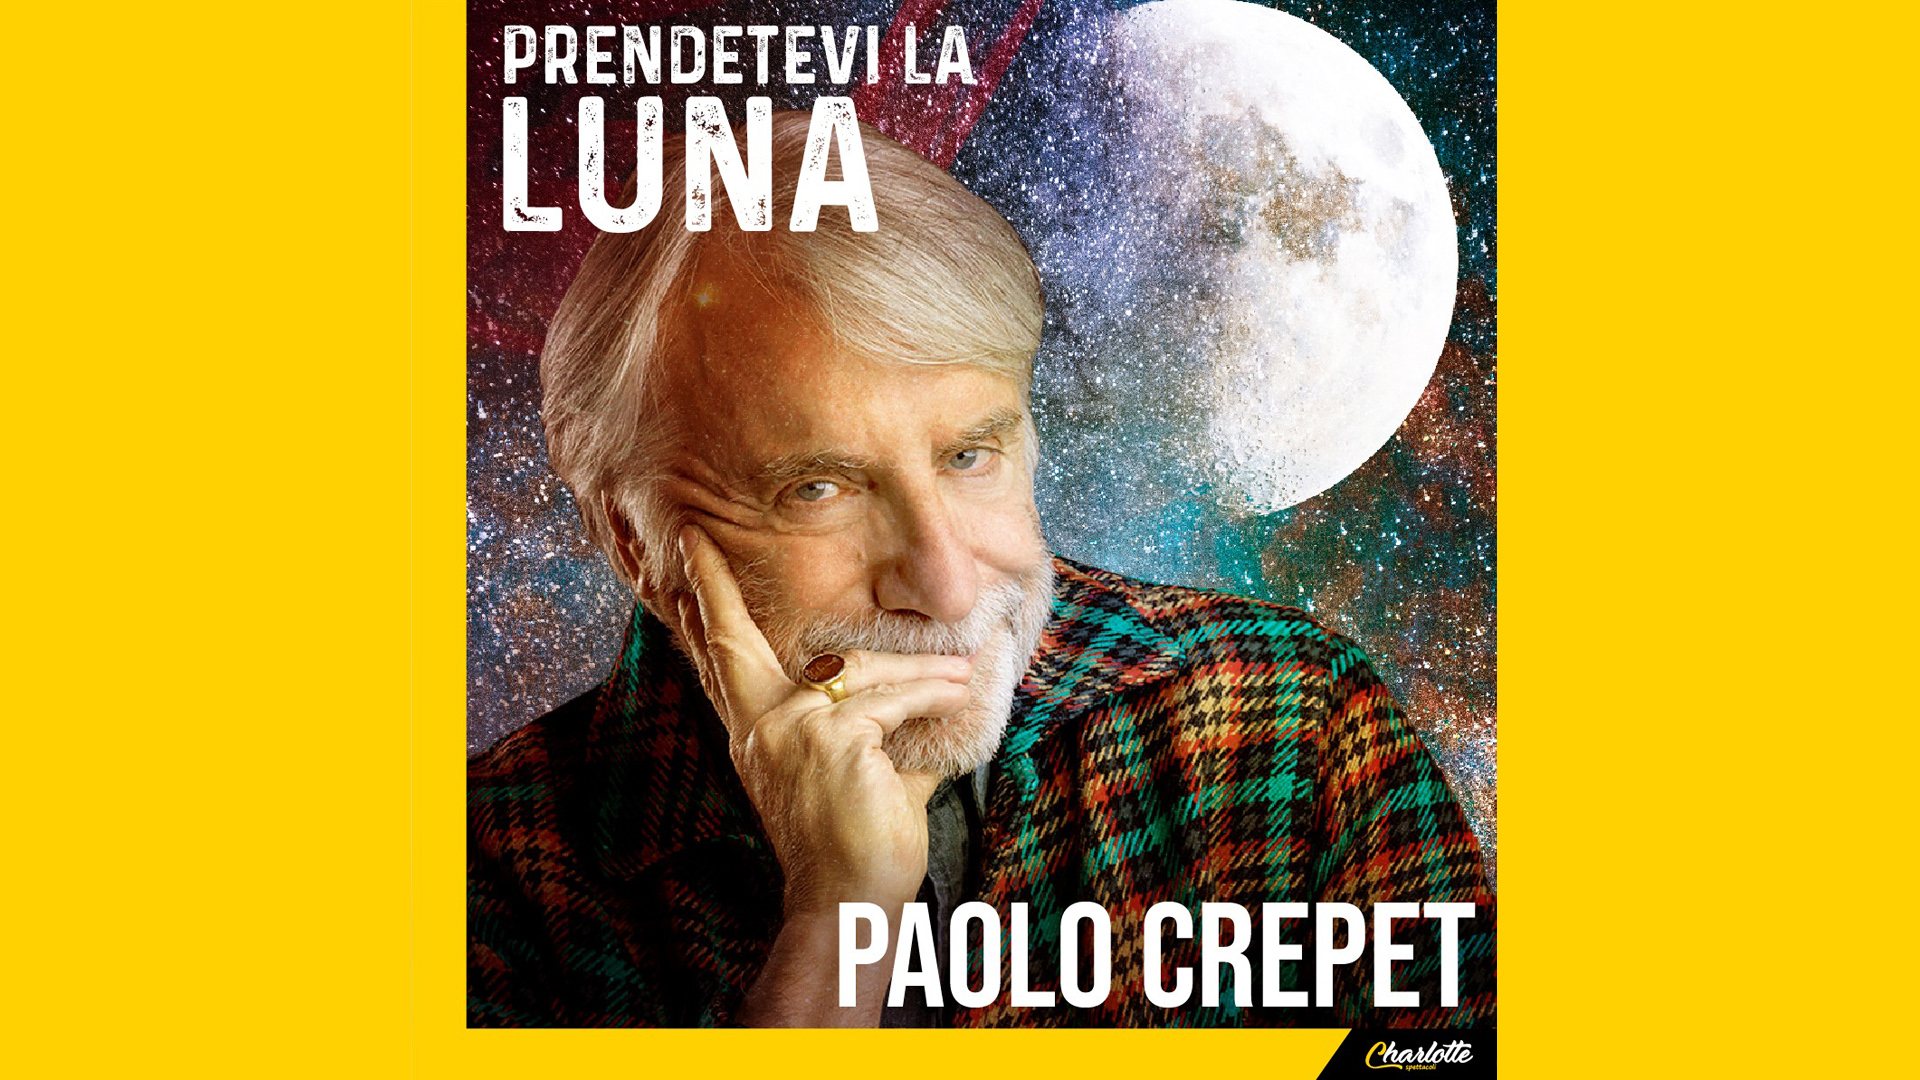 PAOLO CREPET: Prendetevi la luna